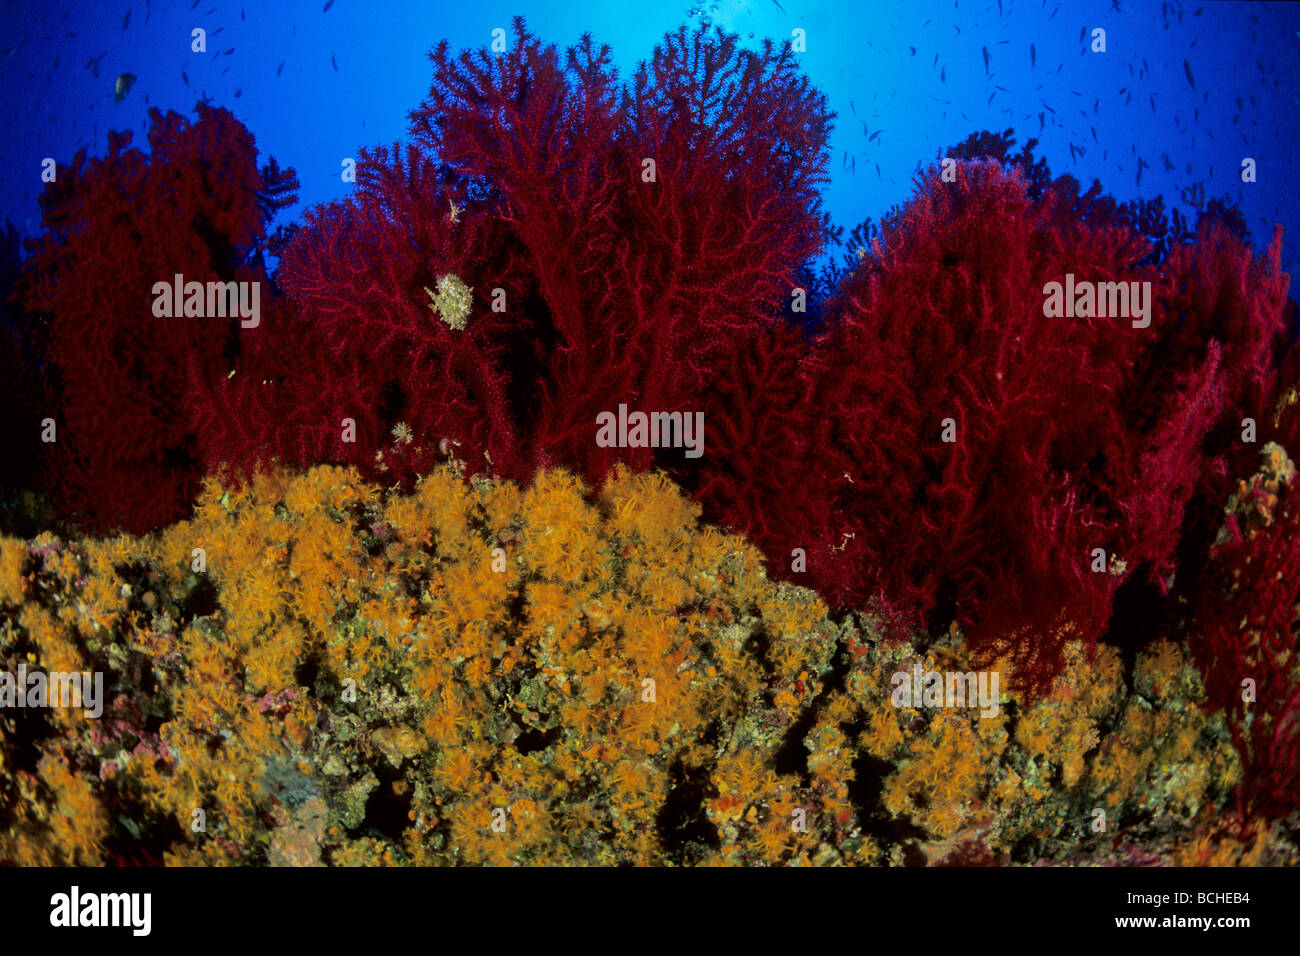 Reef with Parazoanthus and variable Gorgonians Parazoanthus axinellae Paramuricea Vis Island Dalmatia Adriatic Sea Croatia Stock Photo